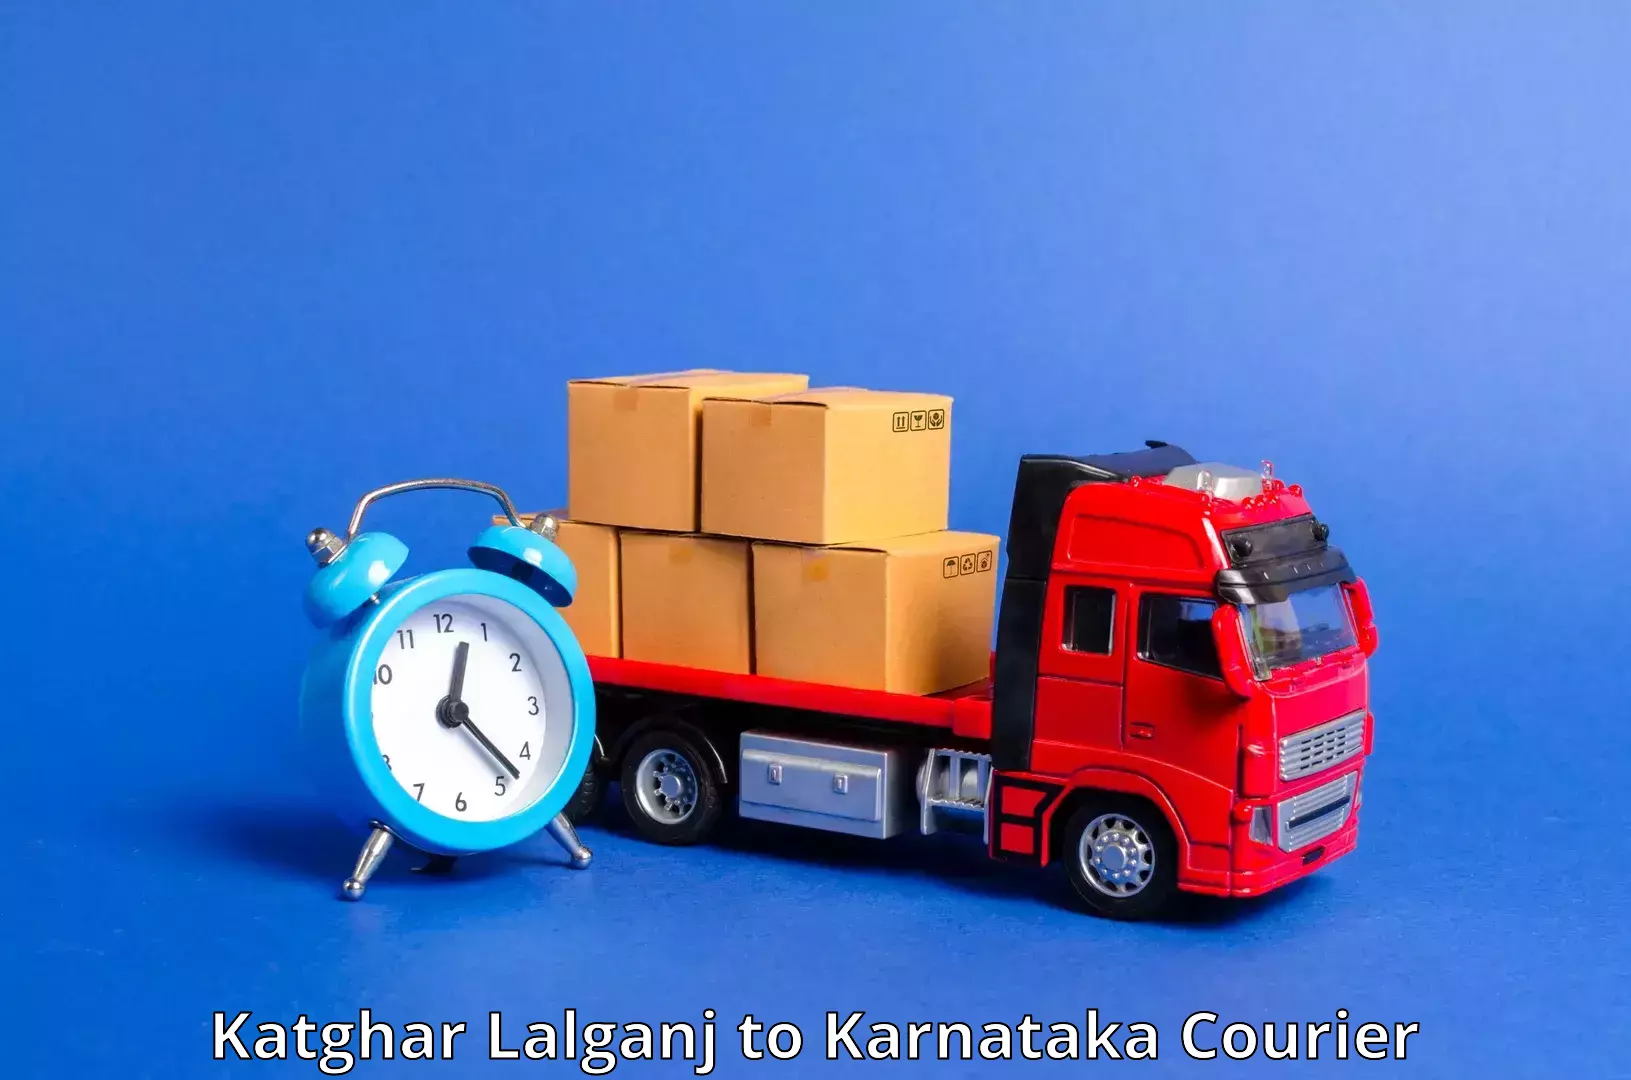 Express package delivery in Katghar Lalganj to Mannaekhelli